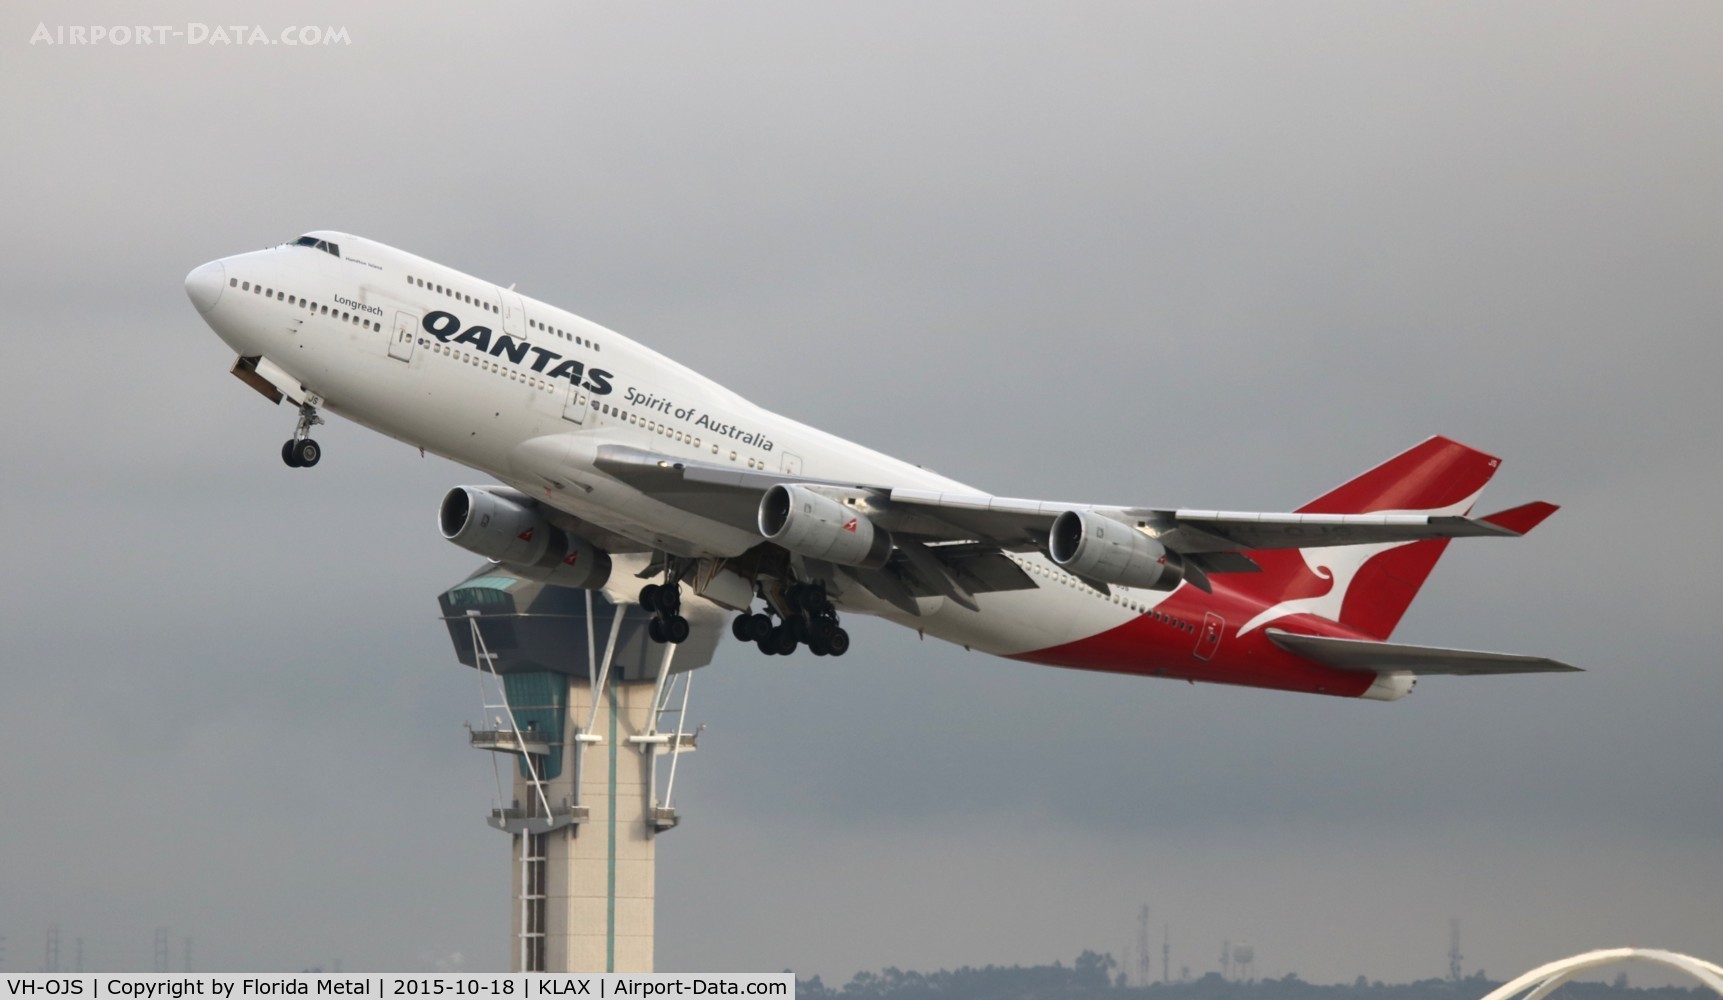 VH-OJS, 1999 Boeing 747-438 C/N 25564, Qantas 747-438